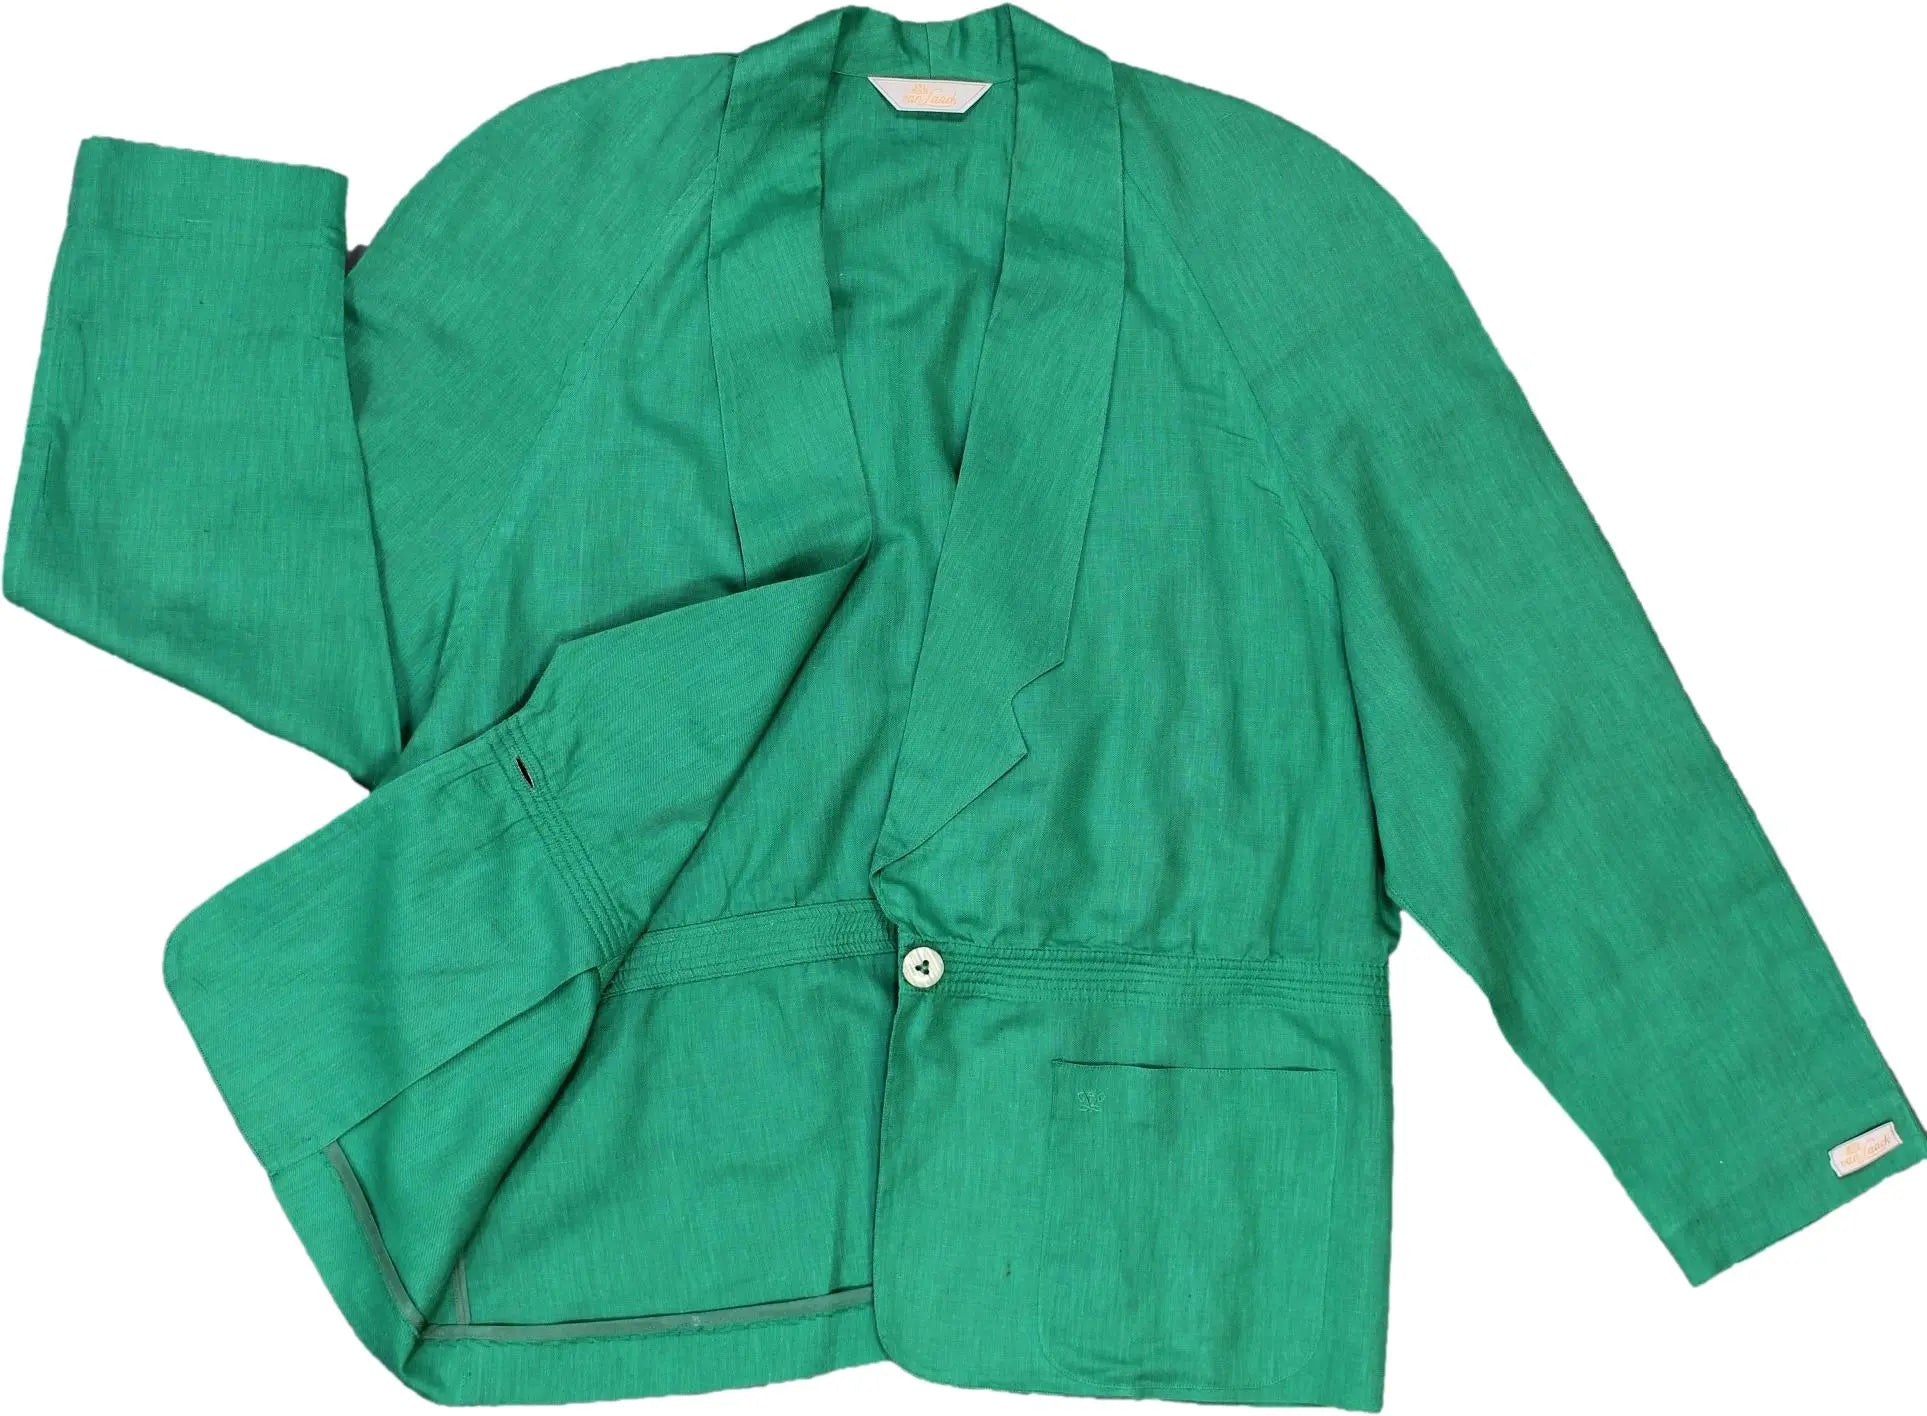 Van Laack - Green Linen Blazer- ThriftTale.com - Vintage and second handclothing